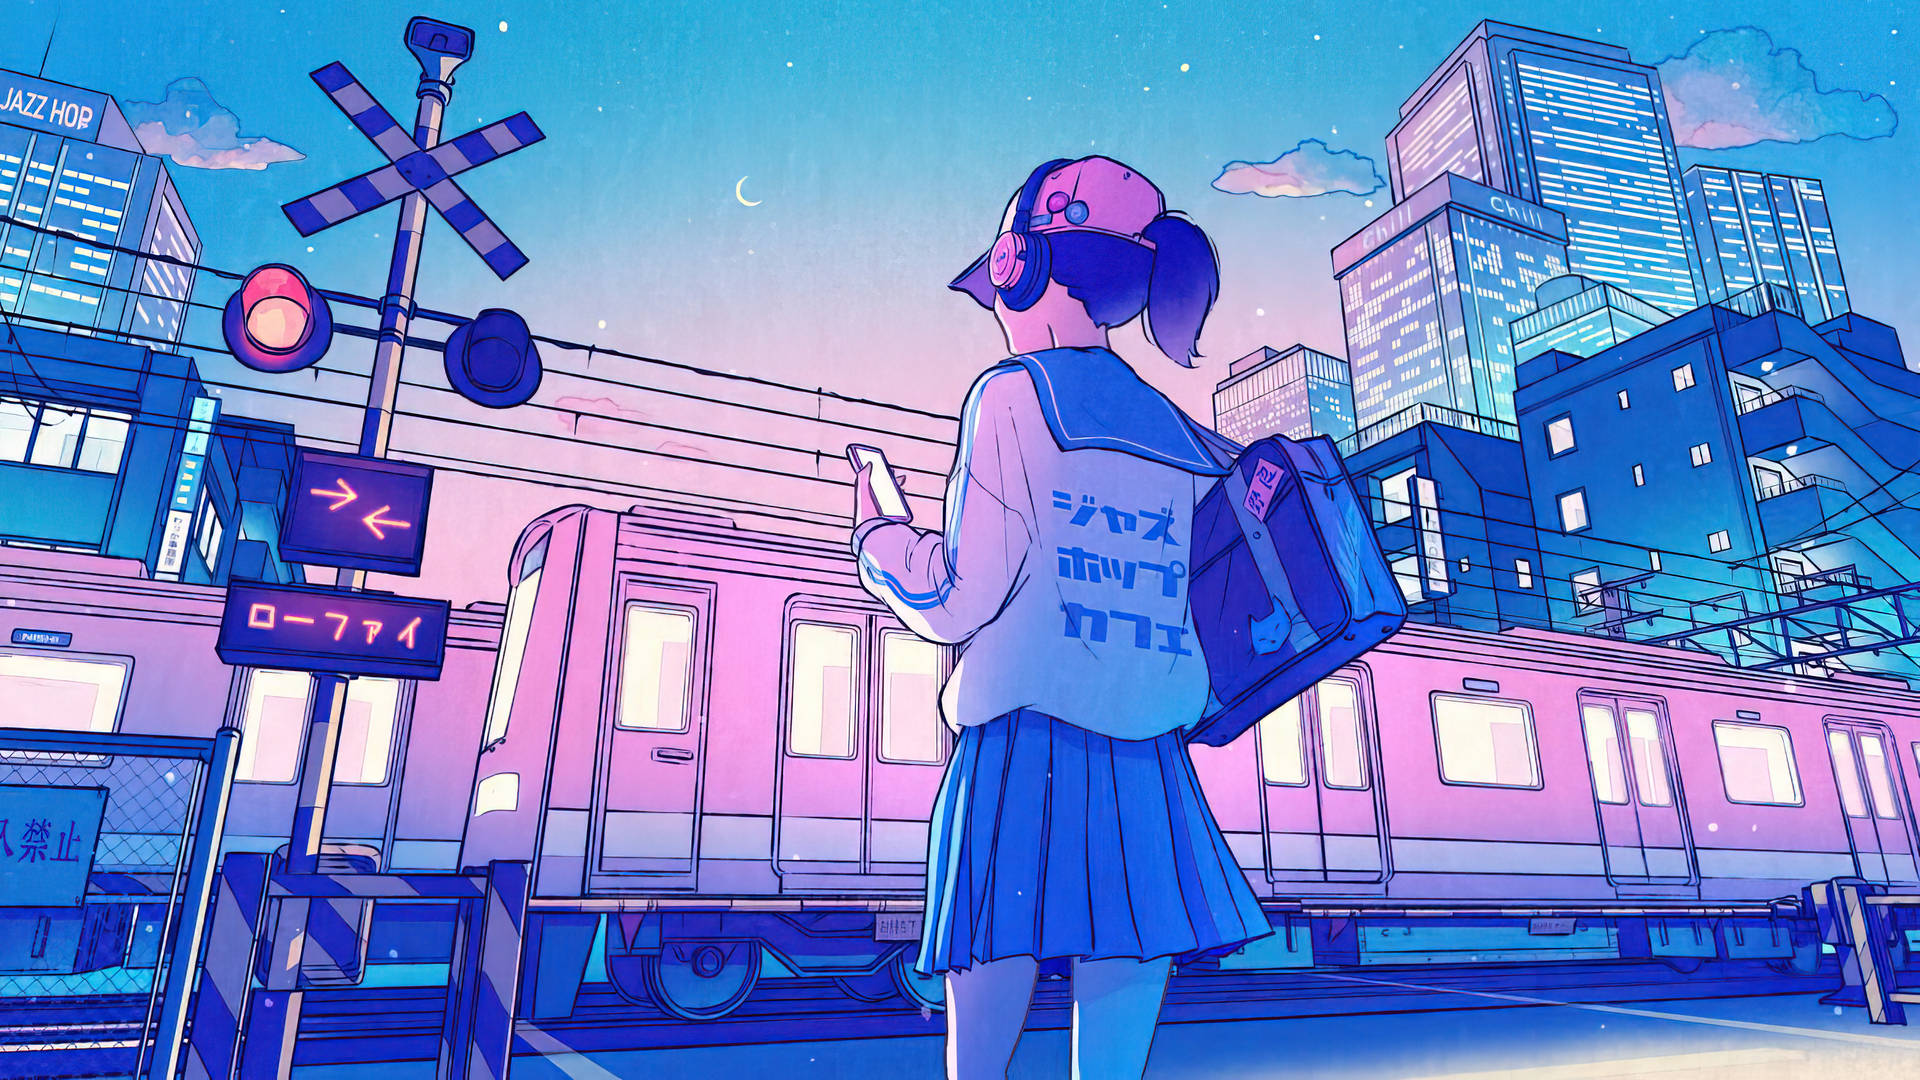 Japanese Anime Girl Student Train Station Background